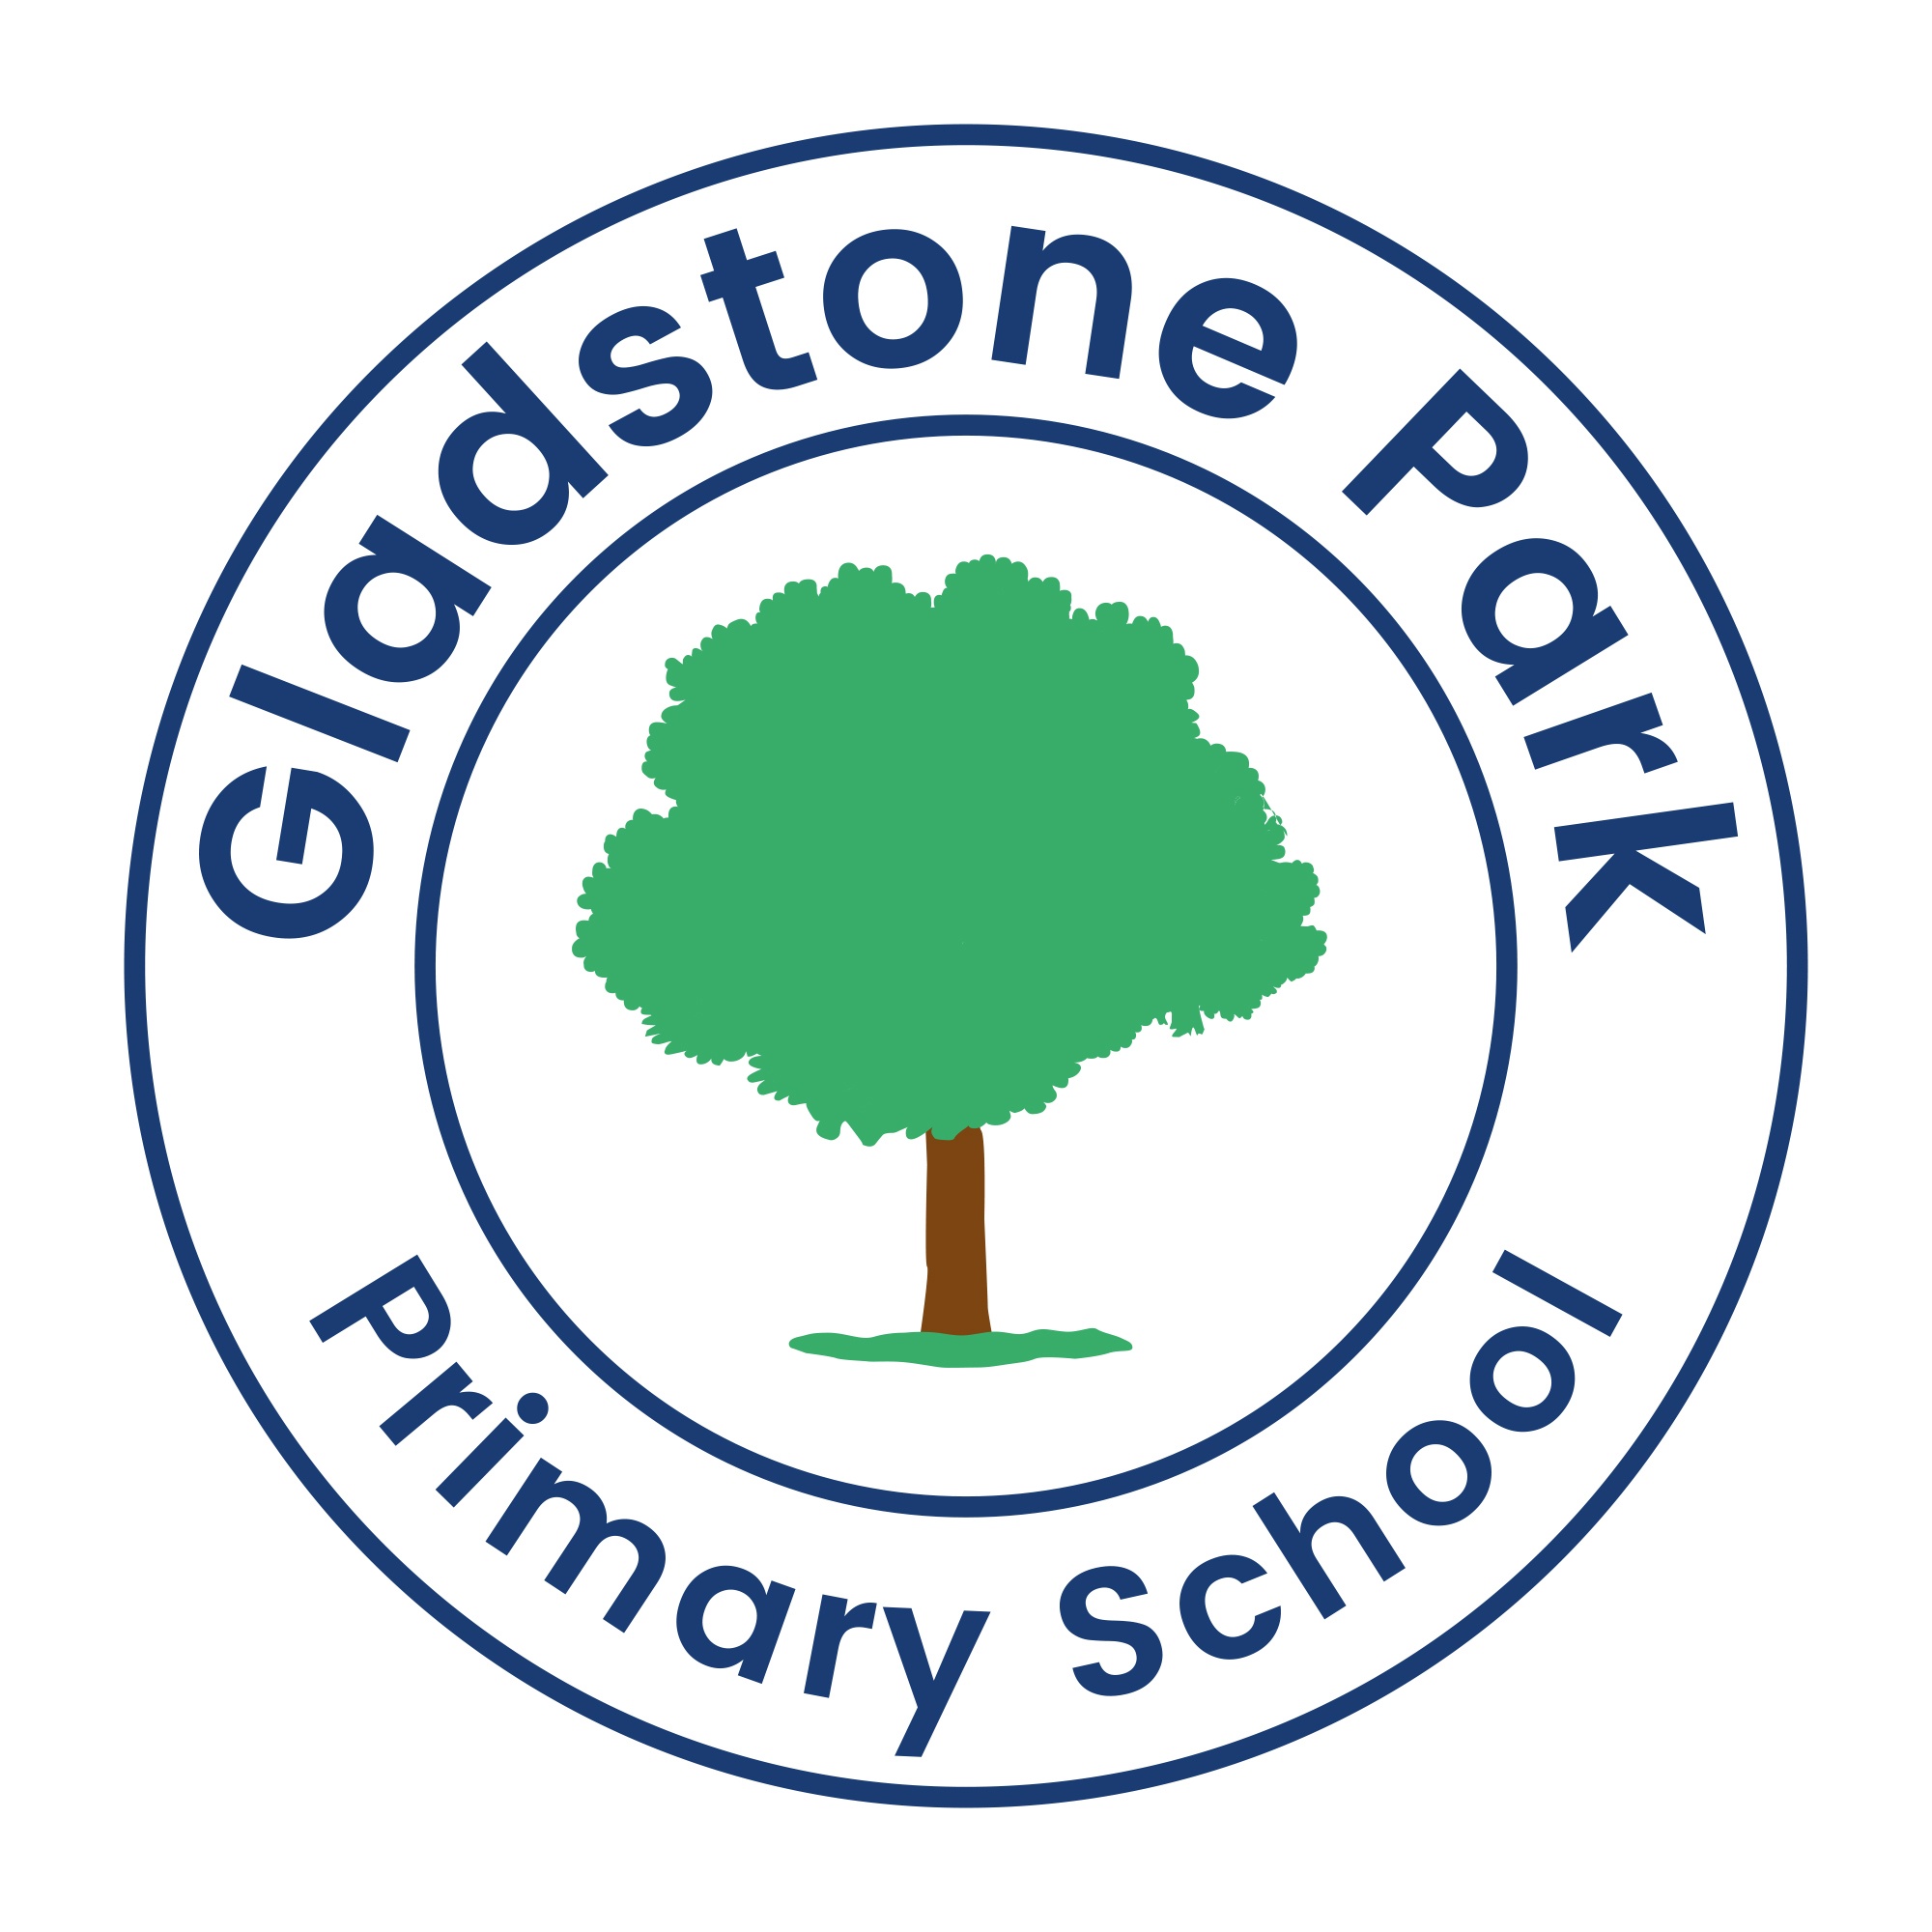 Gladstone Park Primary School name